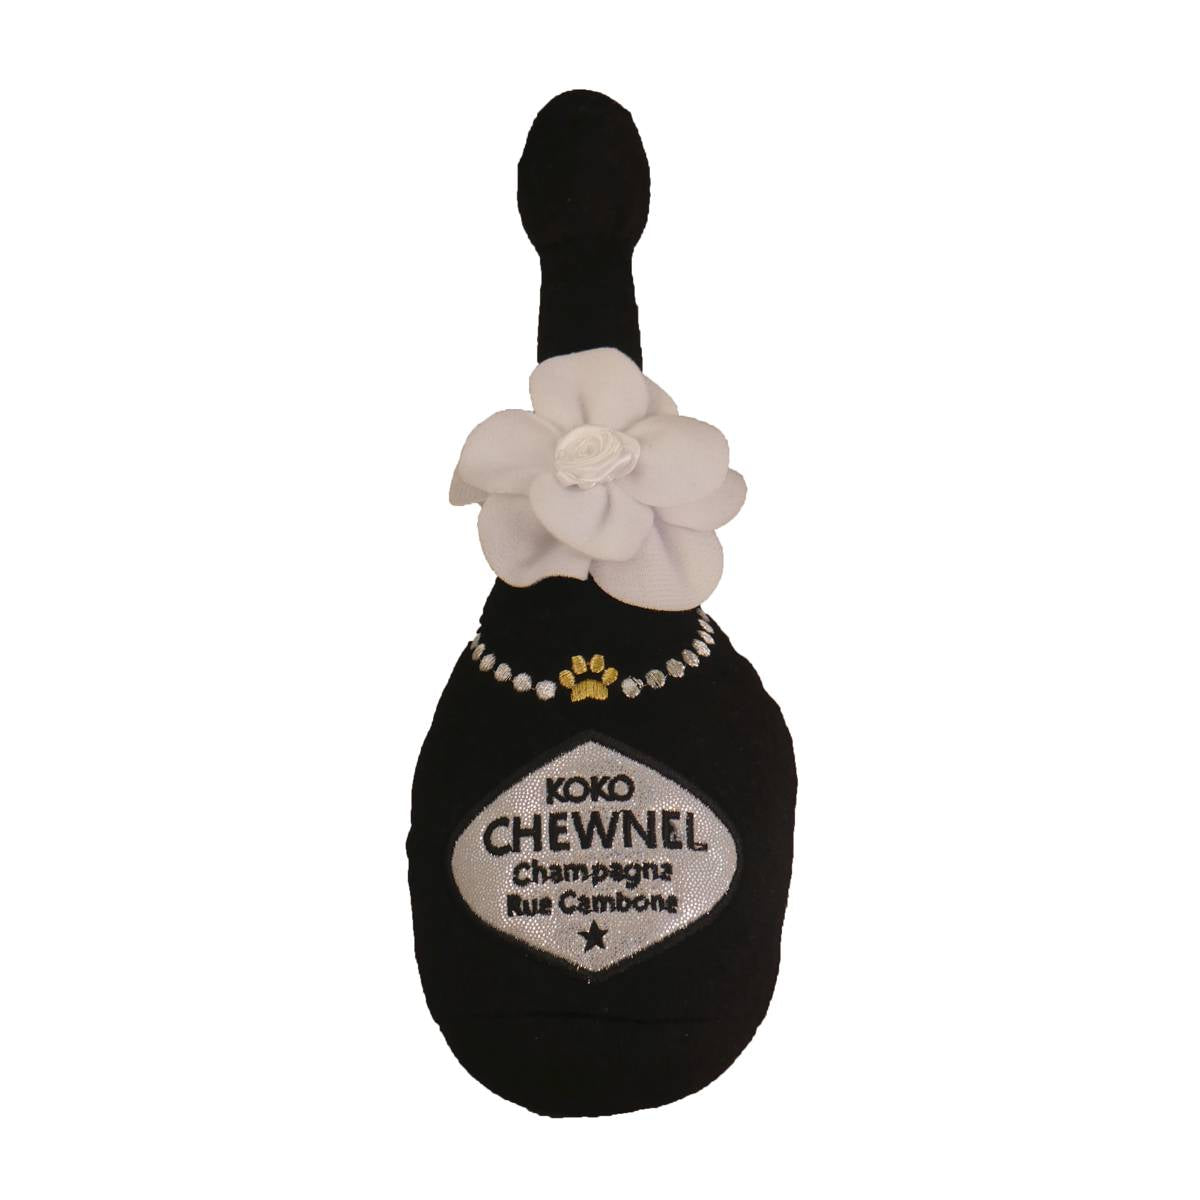 Koko Chewnel Champagne Dog Toy | Pawlicious & Company